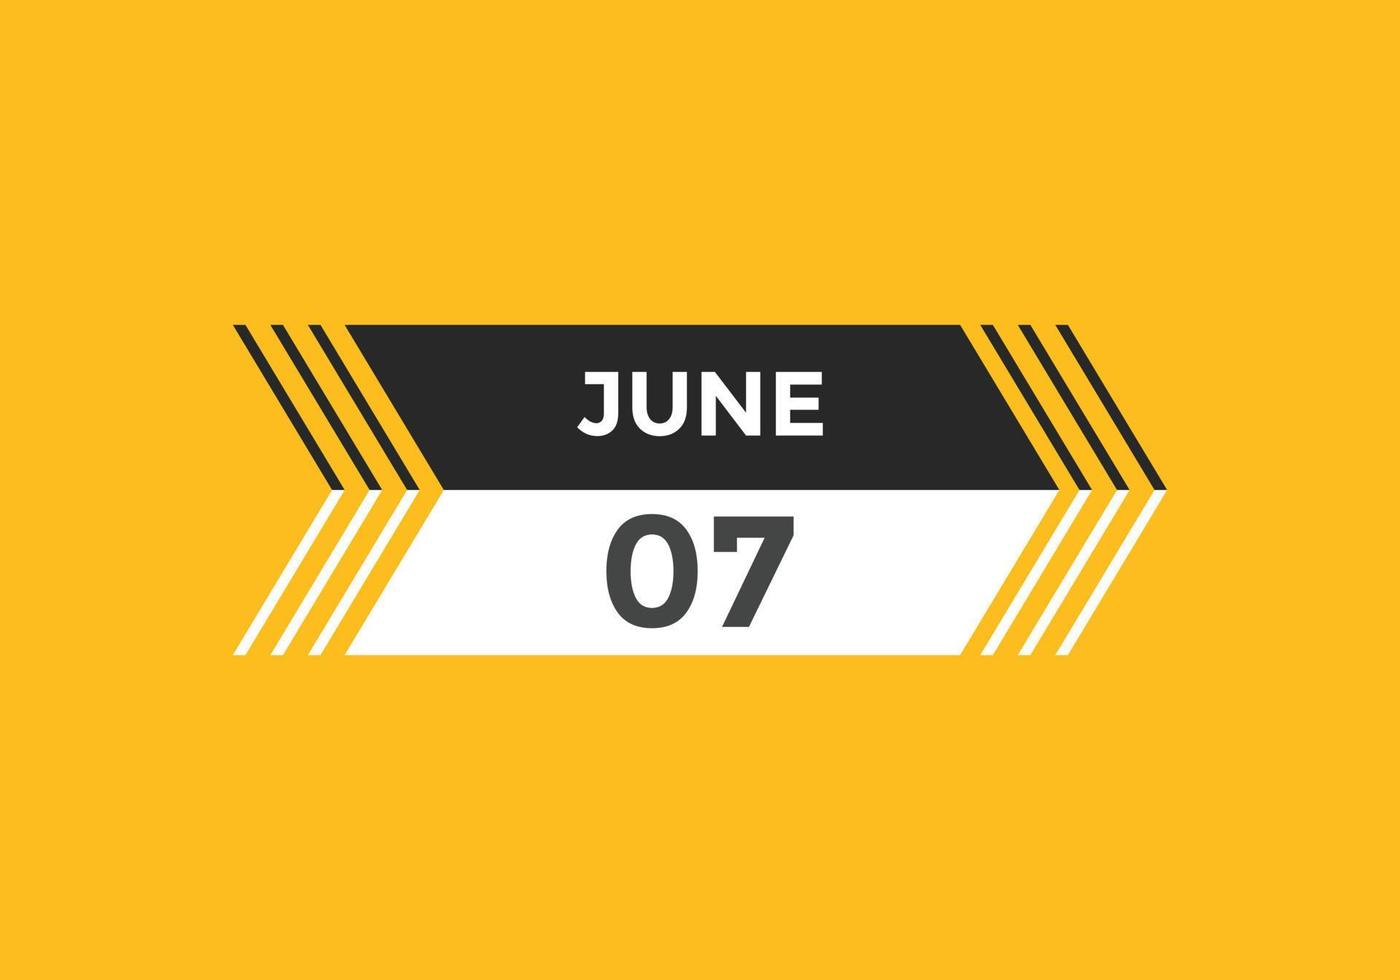 juni 7 kalender påminnelse. 7:e juni dagligen kalender ikon mall. kalender 7:e juni ikon design mall. vektor illustration